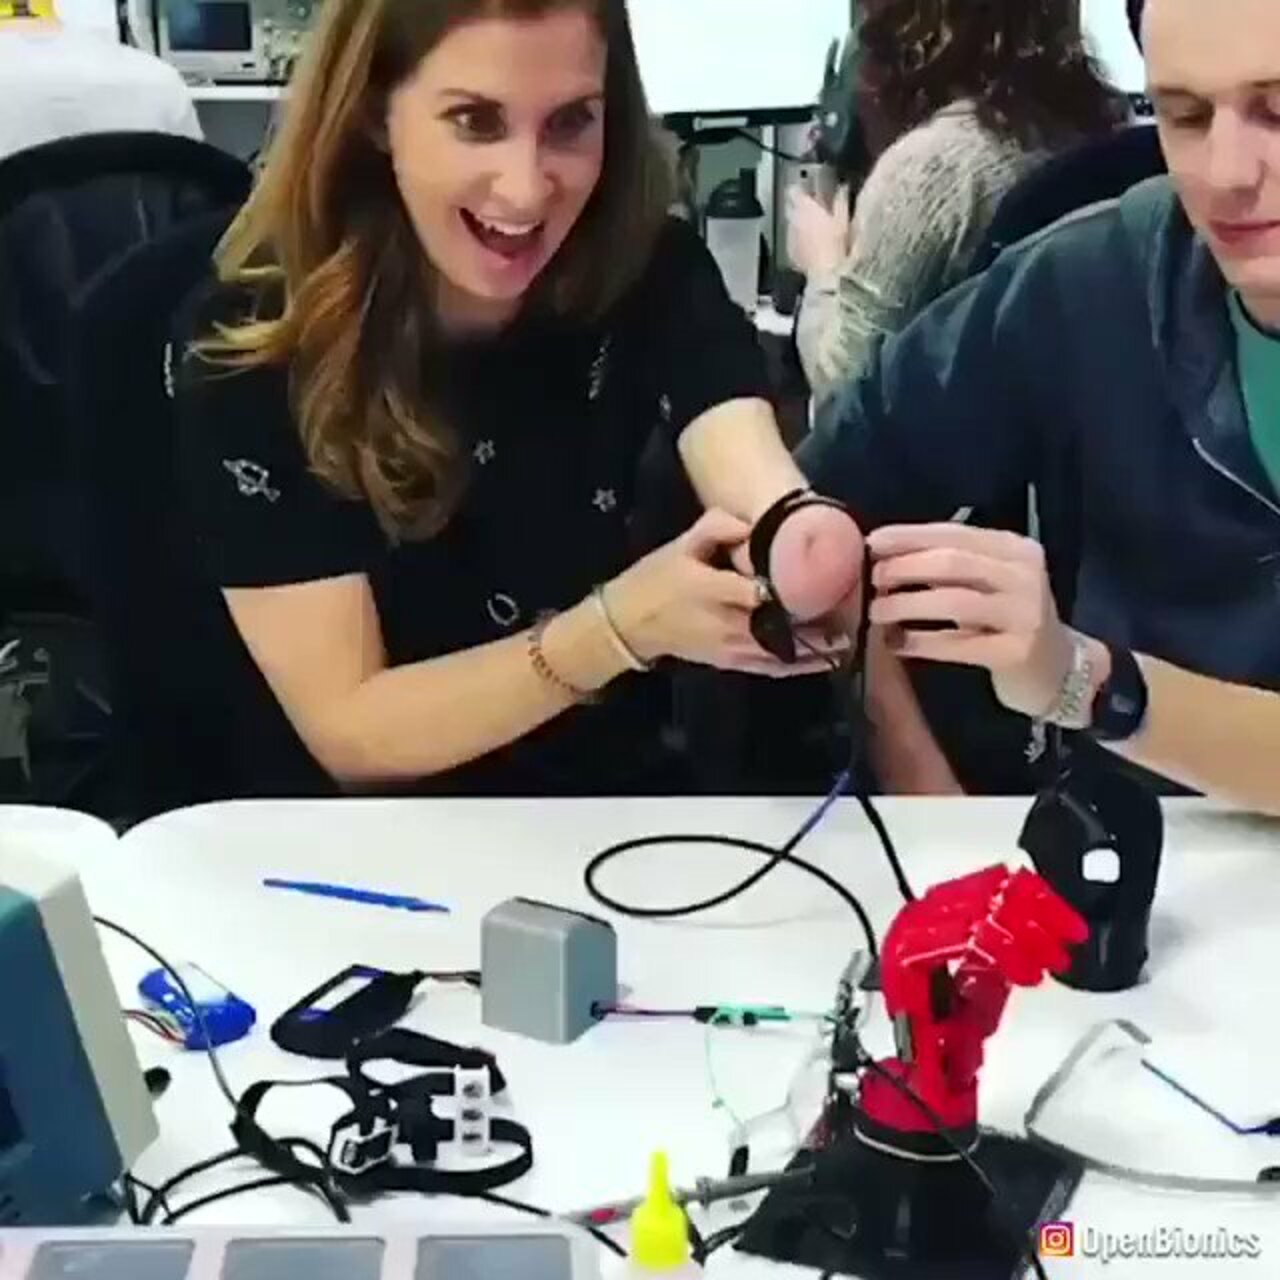 This #3Dprinted bionic arm even lets its user catch a ball by @IntEngineering #AI #ArtificialIntelligence #MI #Robotics #HealthTech #Innovation #TechForGood #Technology cc: @ianljones98 @nathealings @guzmannutrition https://t.co/CvkubuOiWX